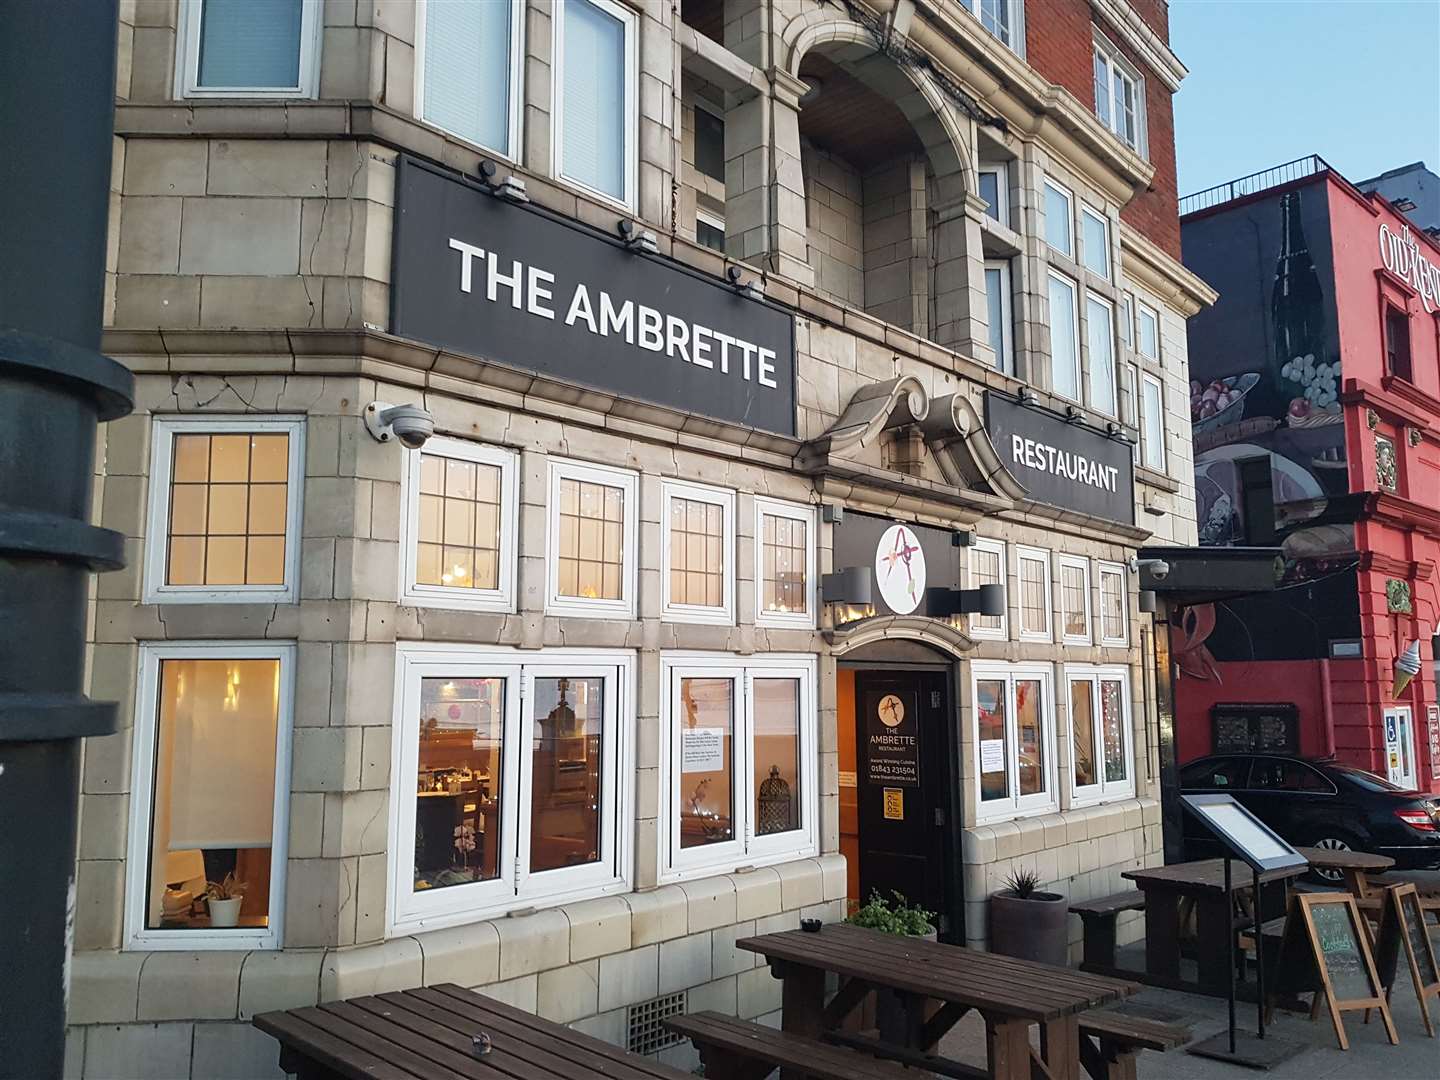 The Ambrette restaurant in Margate